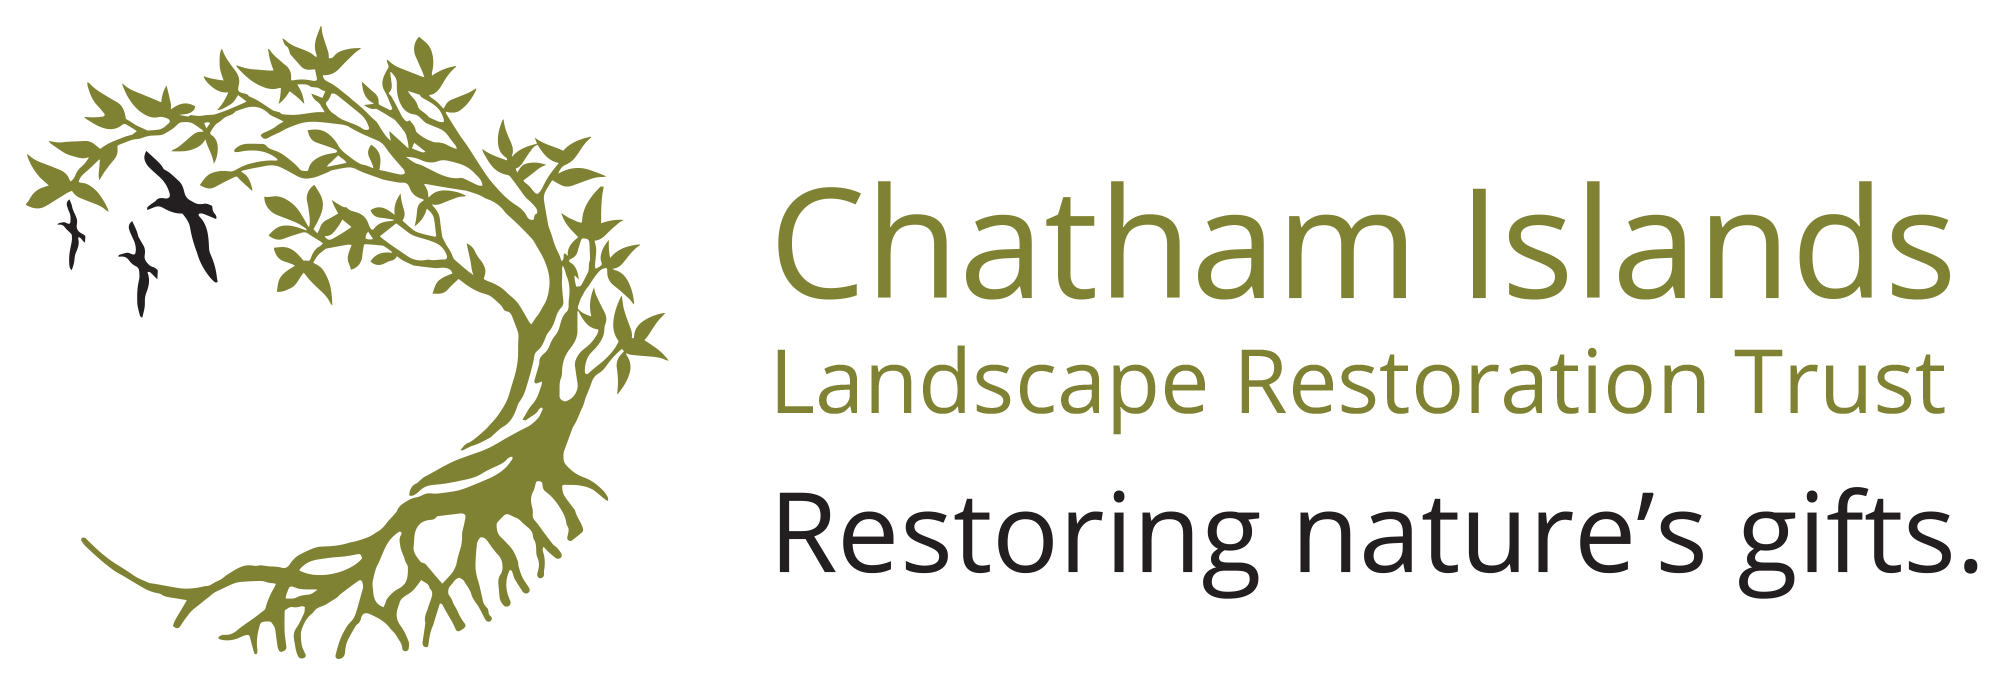 Chatham Islands Landscape Restoration Trust